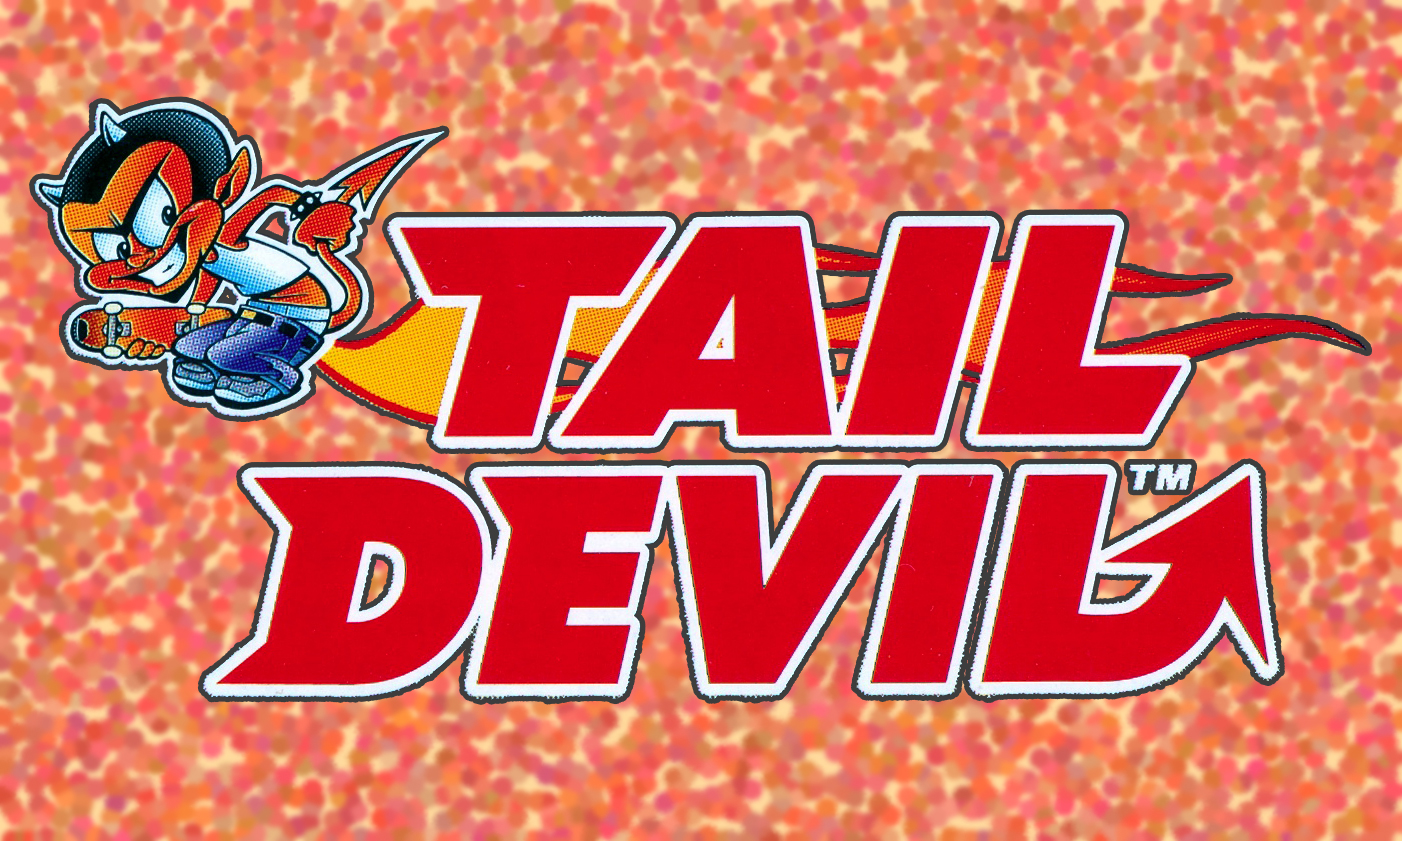 devil tail